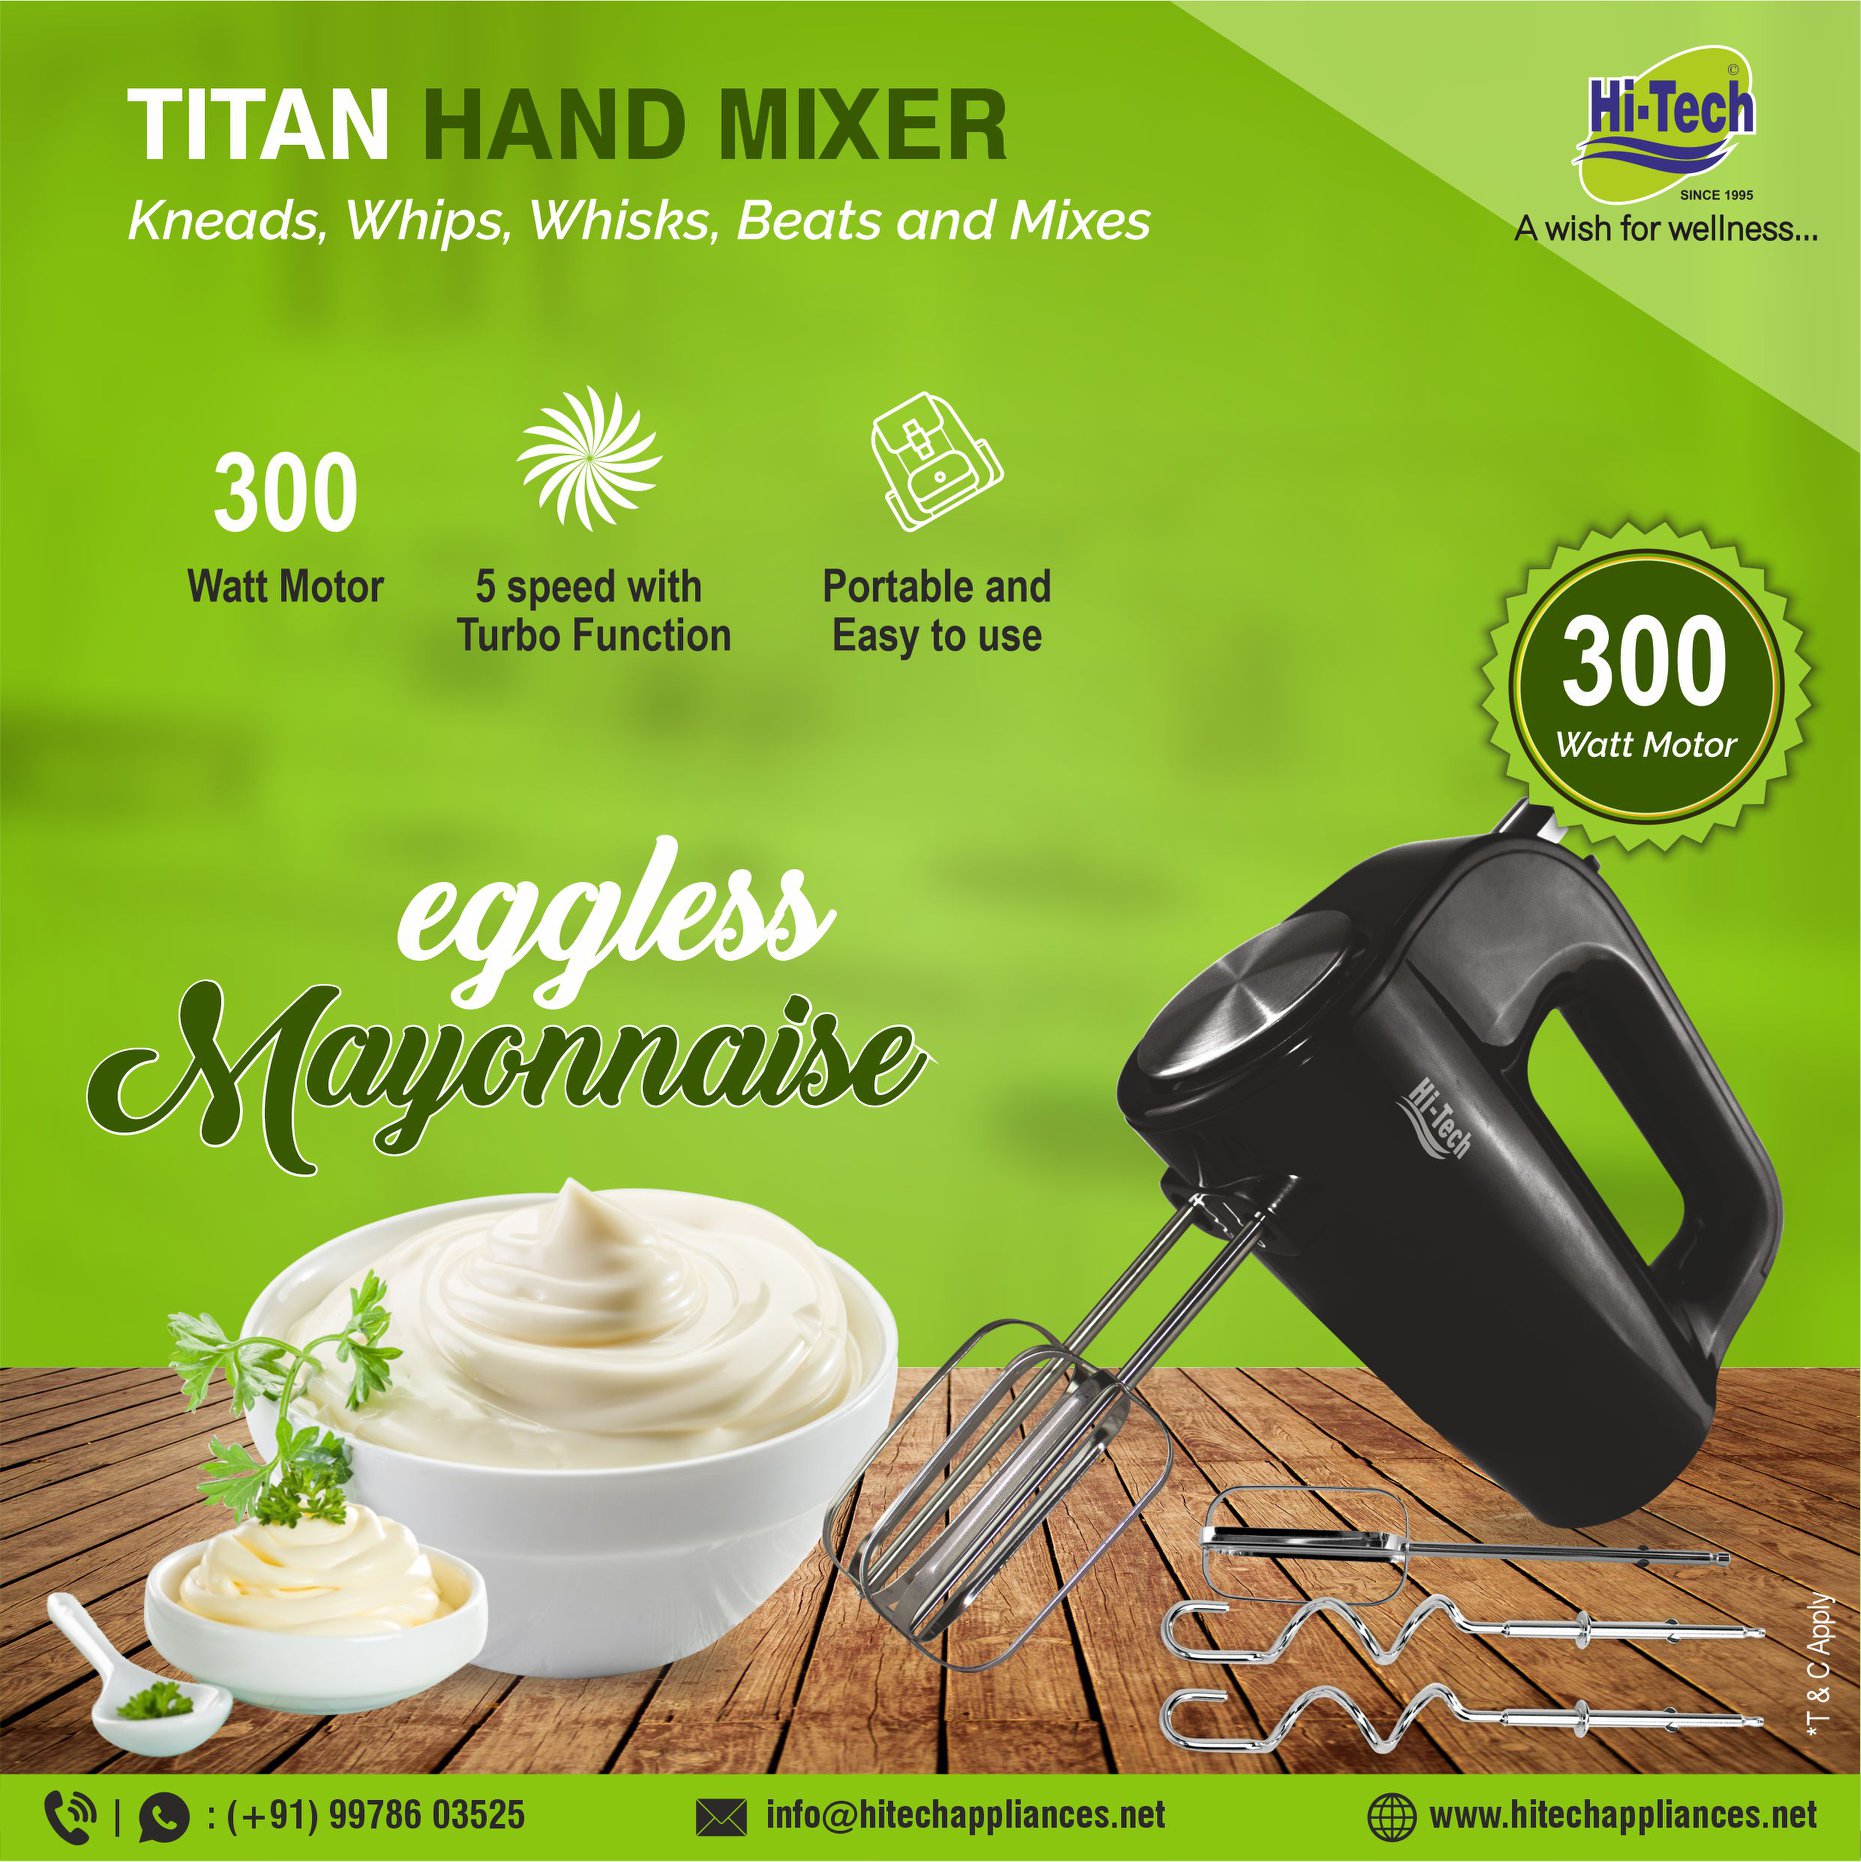 Eggless Homemade Mayonnaise with Hi-Tech Titan hand mixer